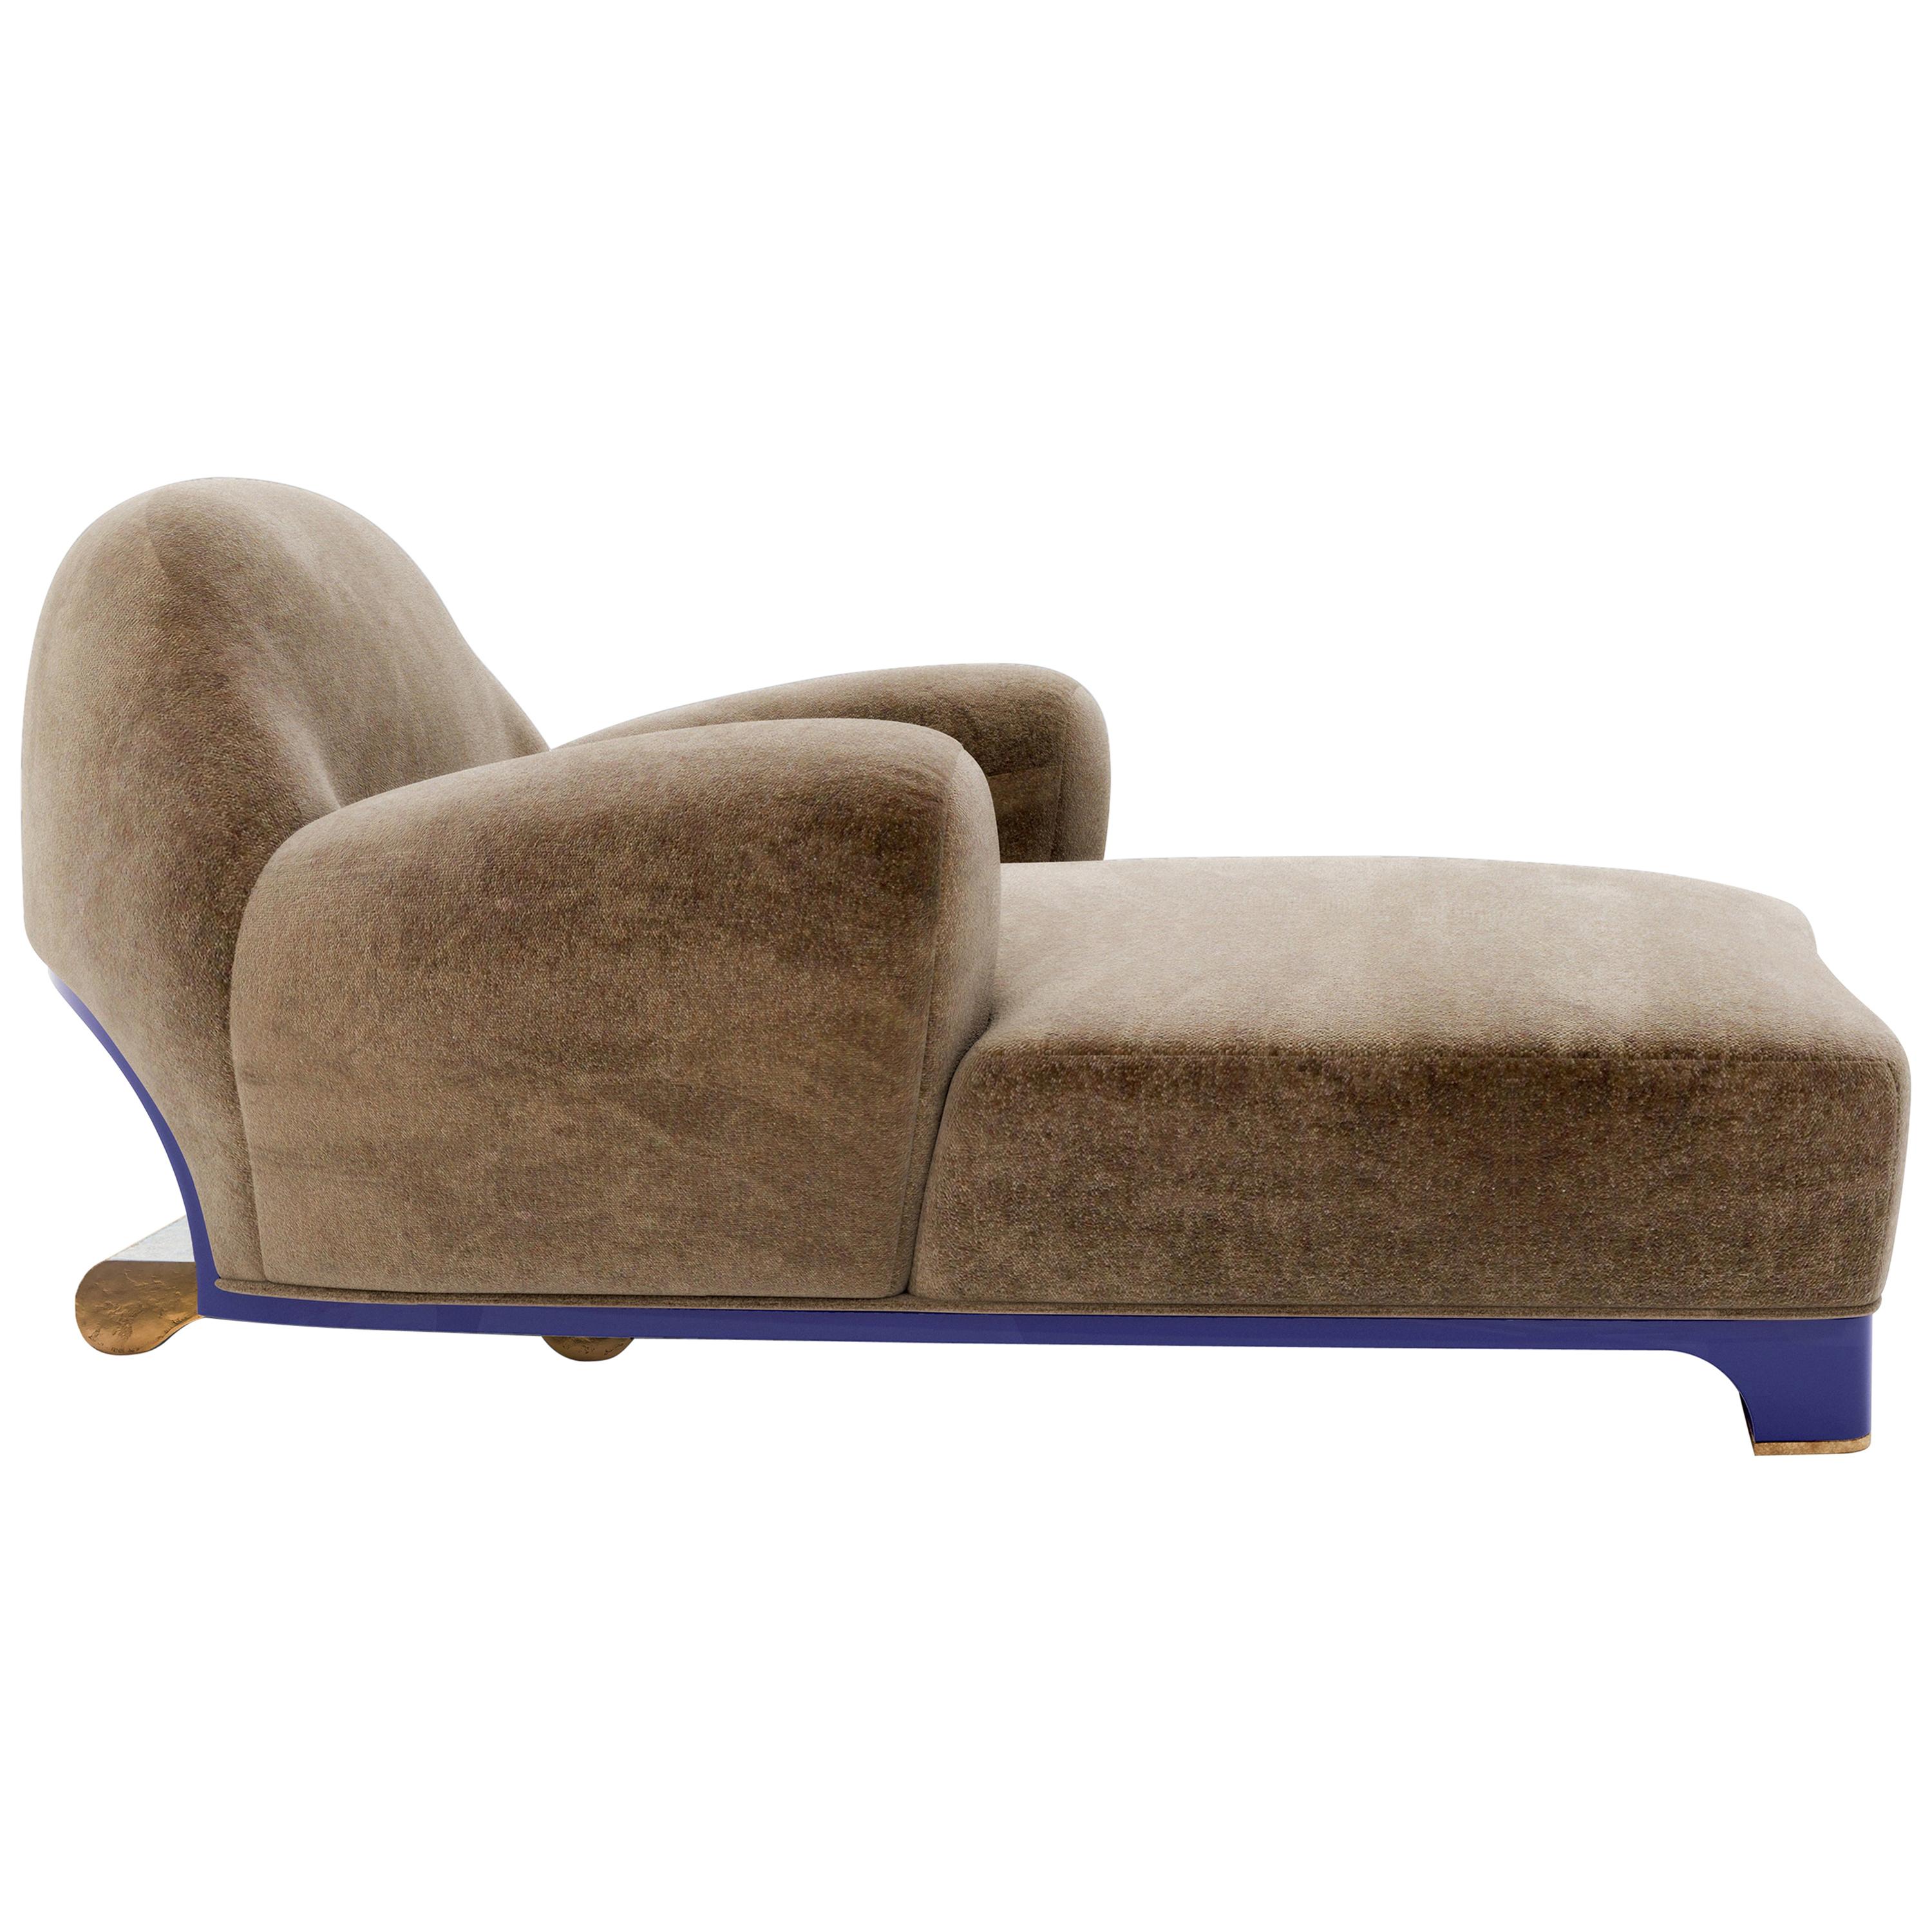 Achille Salvagni, "Tato Chaise Longue", Velvet Upholstery, Lacquer, Contemporary For Sale